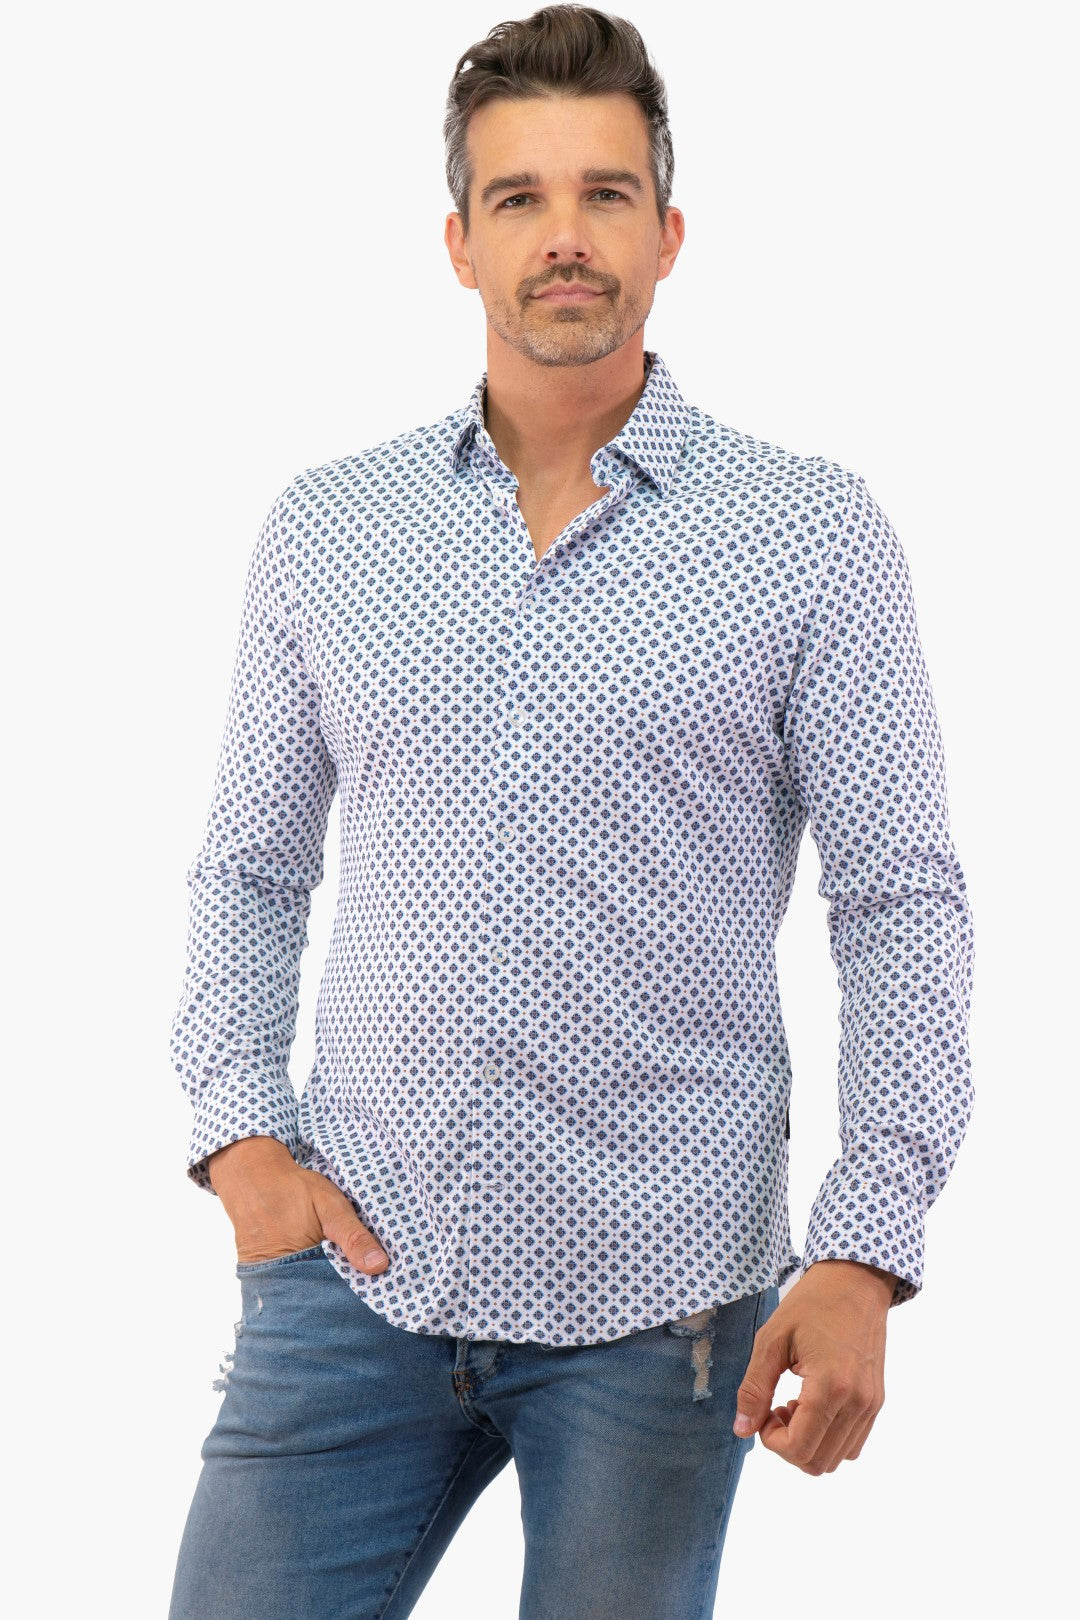 Hörst Long Sleeve Shirt in Blue color (Off-Hrsl241706-400)